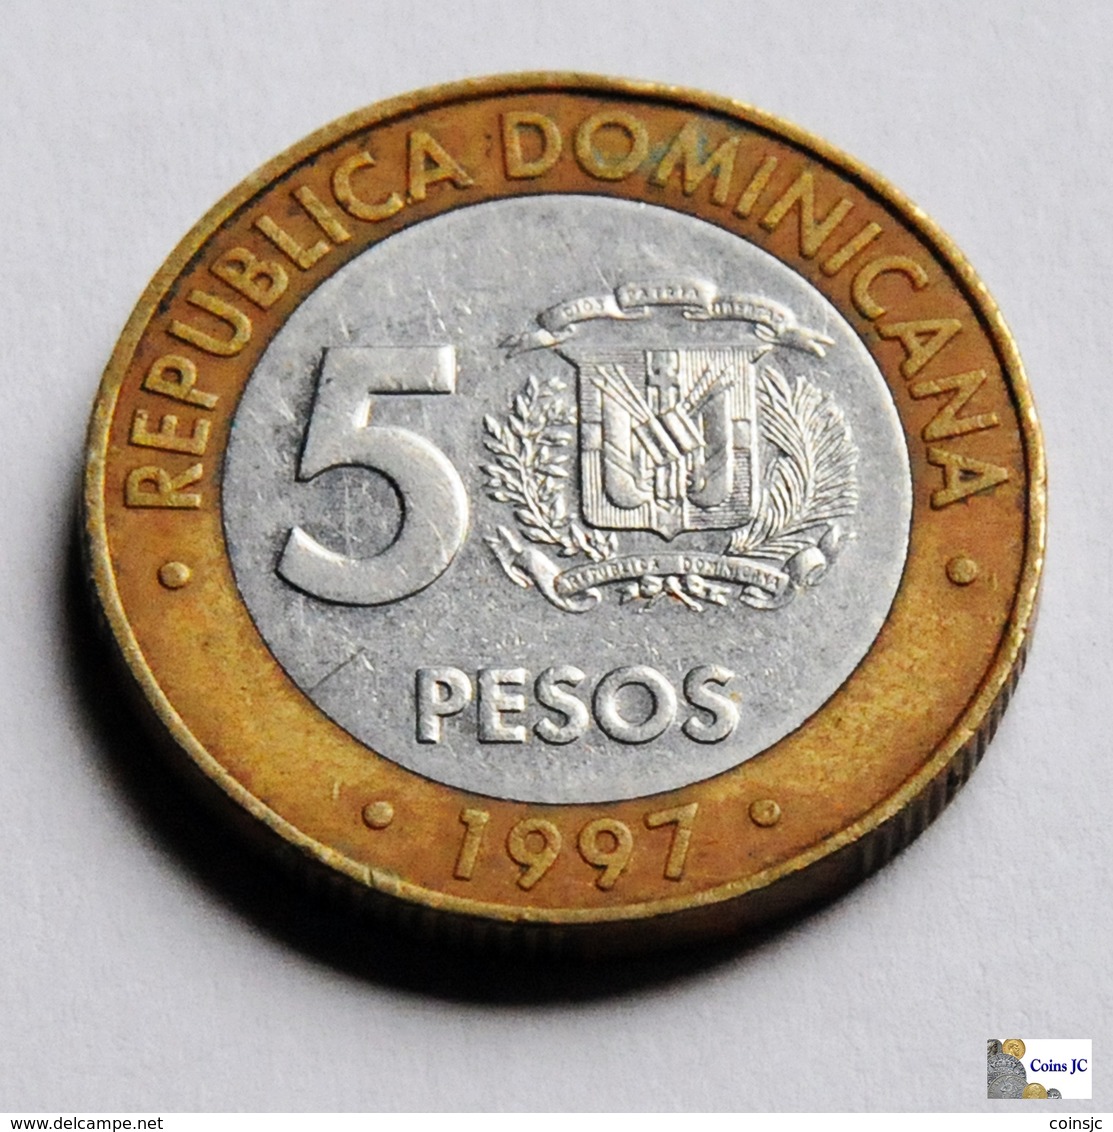 Dominican Republic - 5 Pesos - 1997 - Dominicana